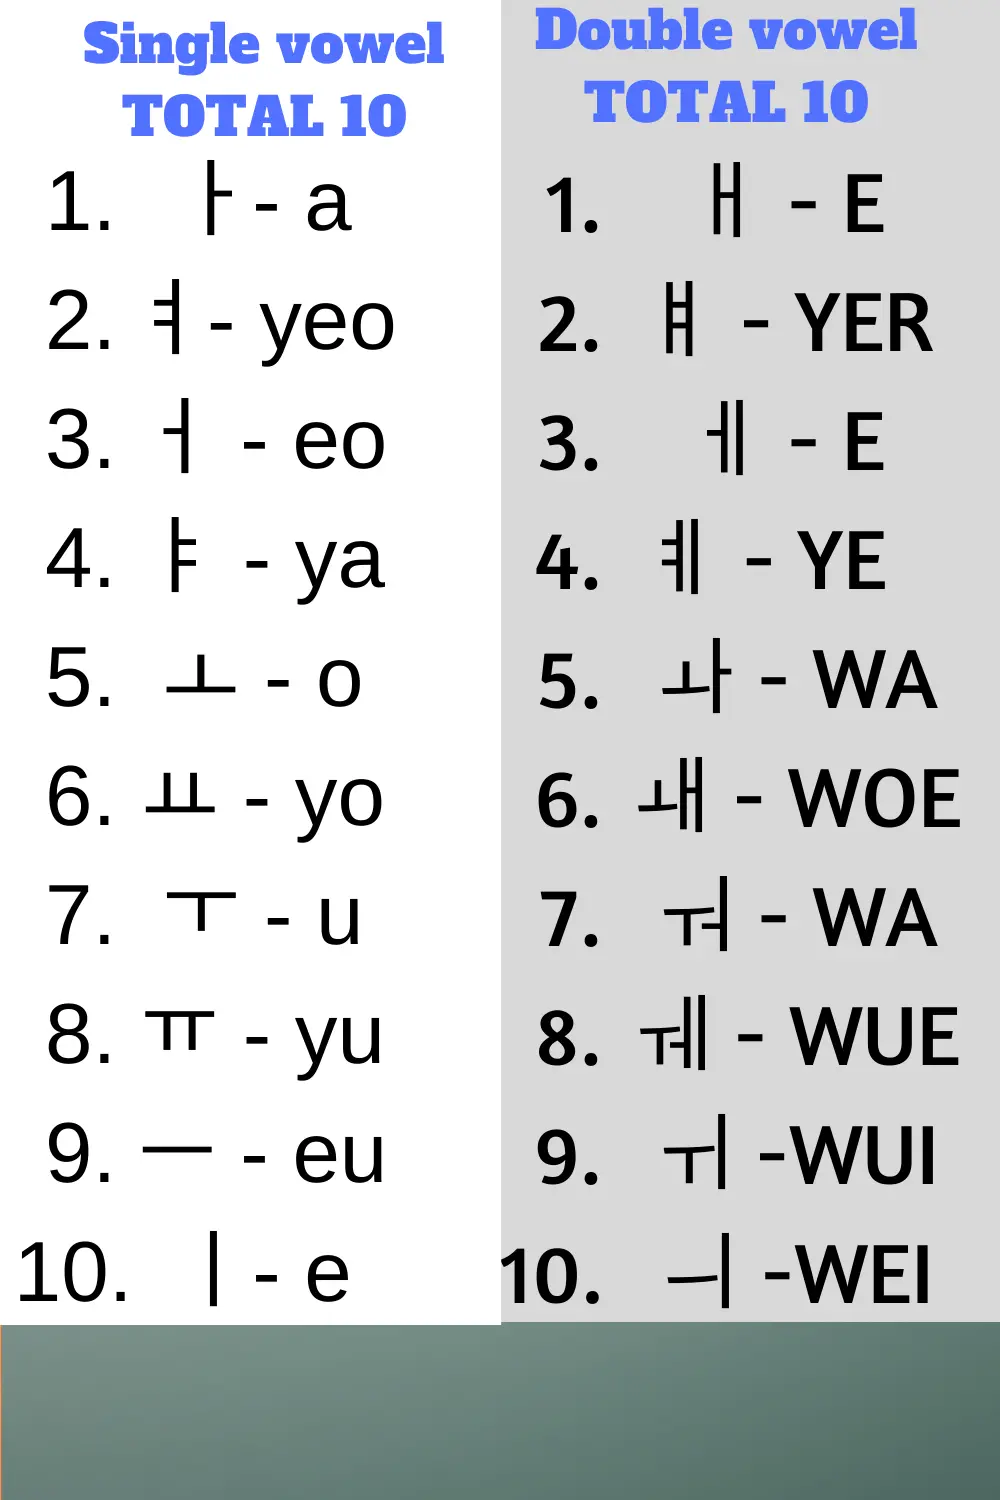 Korean alphabet chart with pronunciation - korean- vowels and consonants